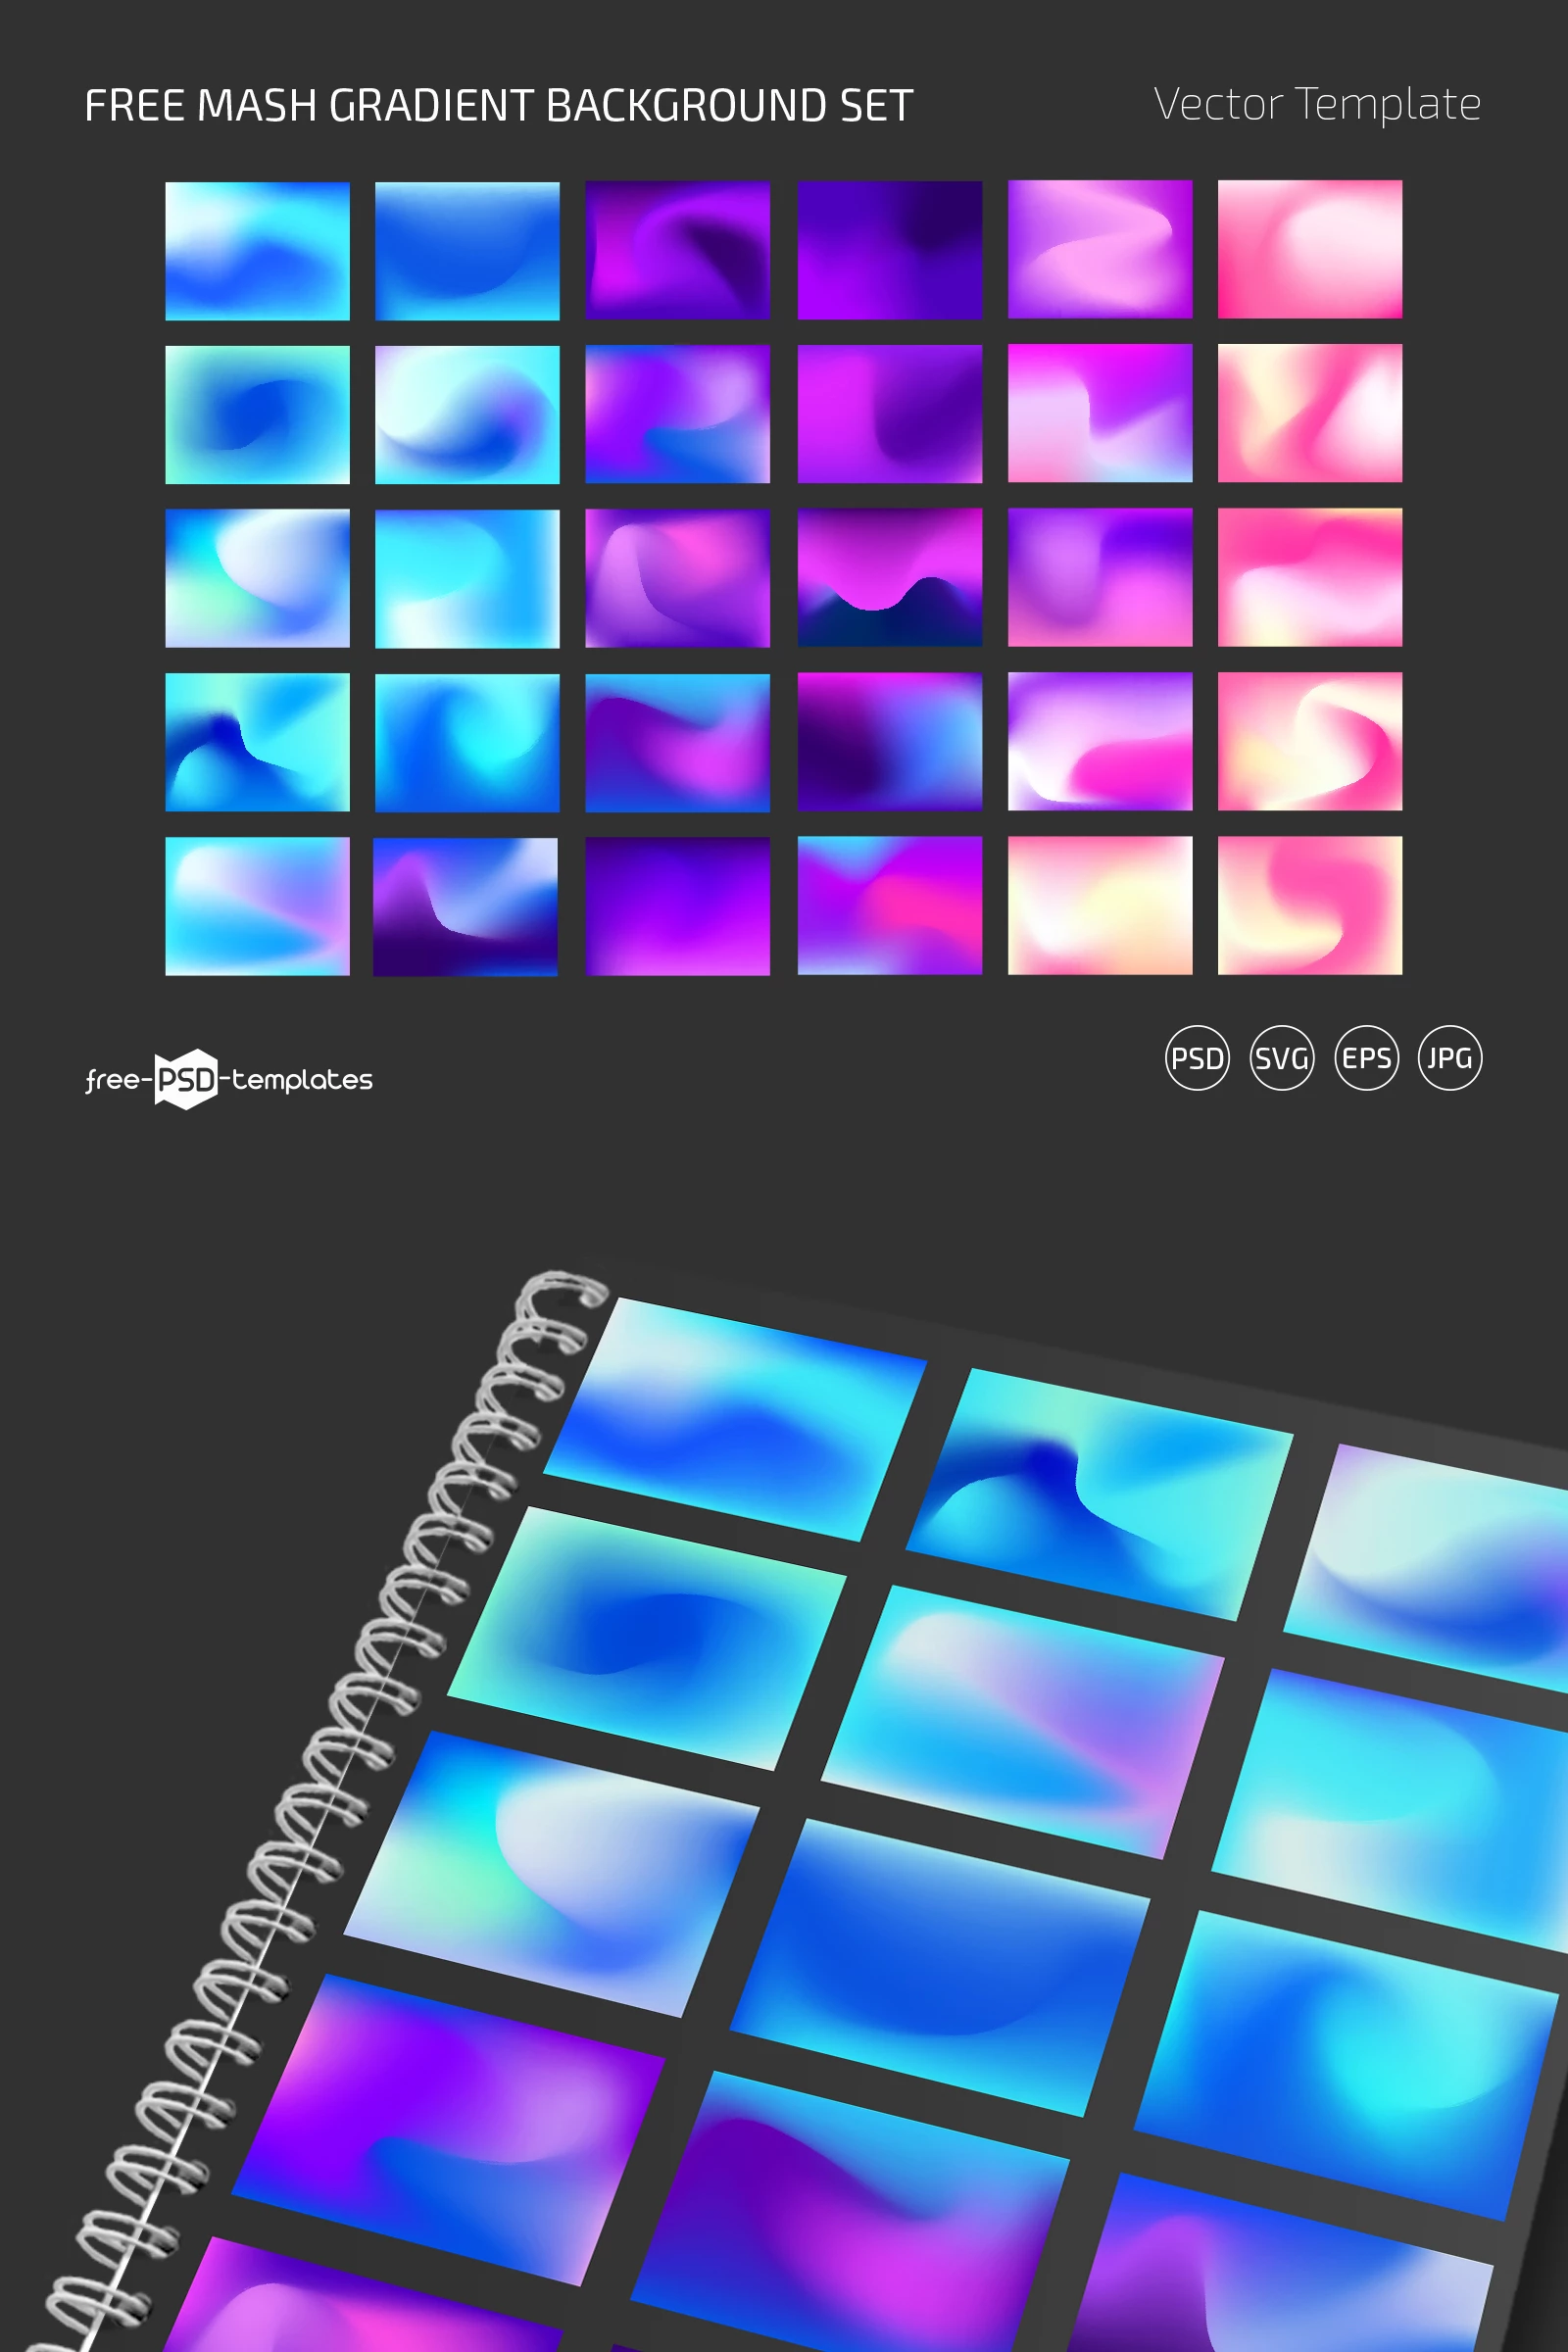 Free Mesh Gradient Background Set (PSD, EPS, JPEG)